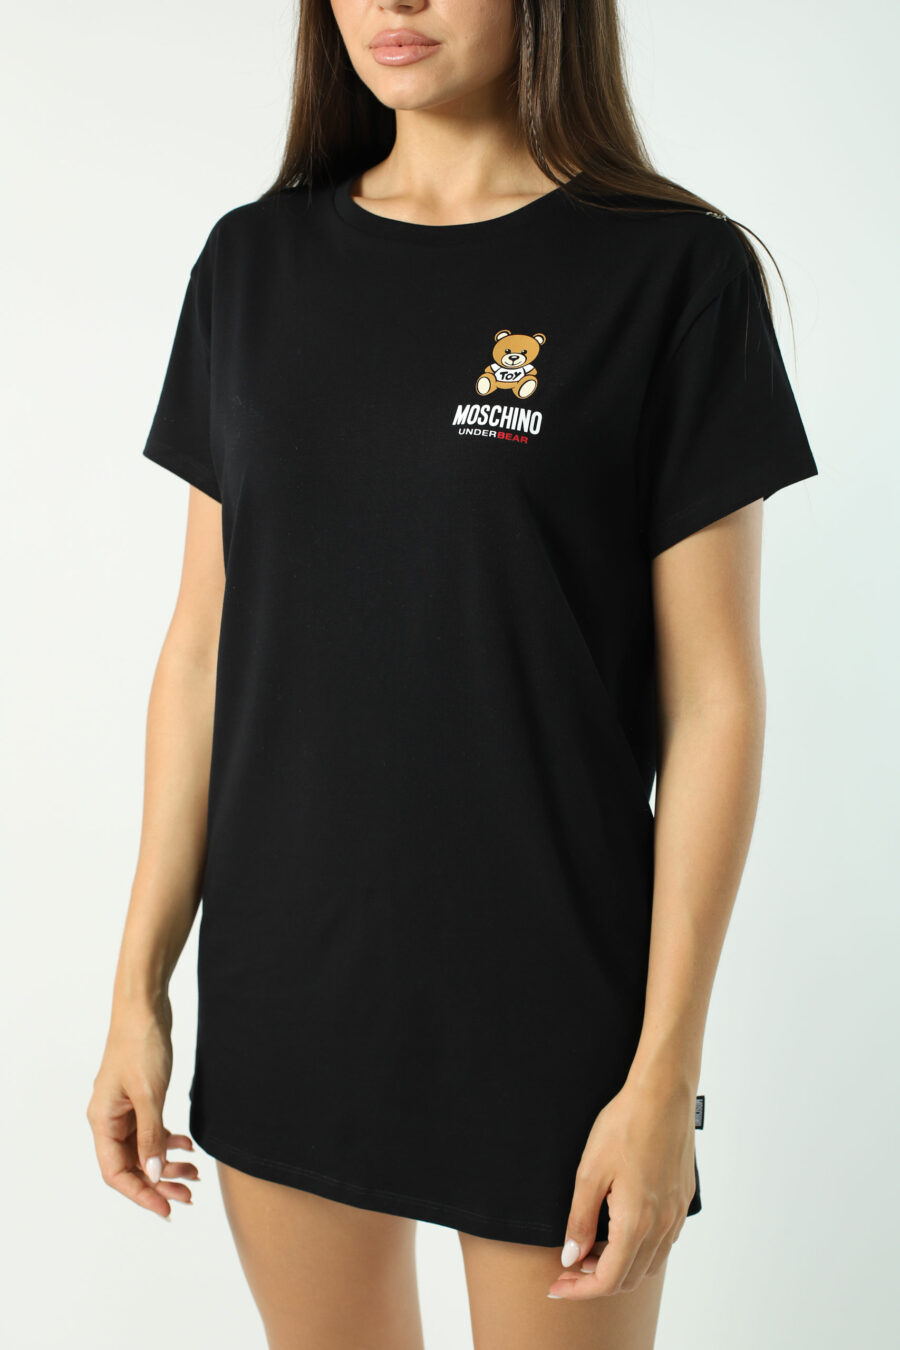 Schwarzes Maxi-T-Shirt mit Mini-Logo-Bär unterm Arm - Fotos 2799